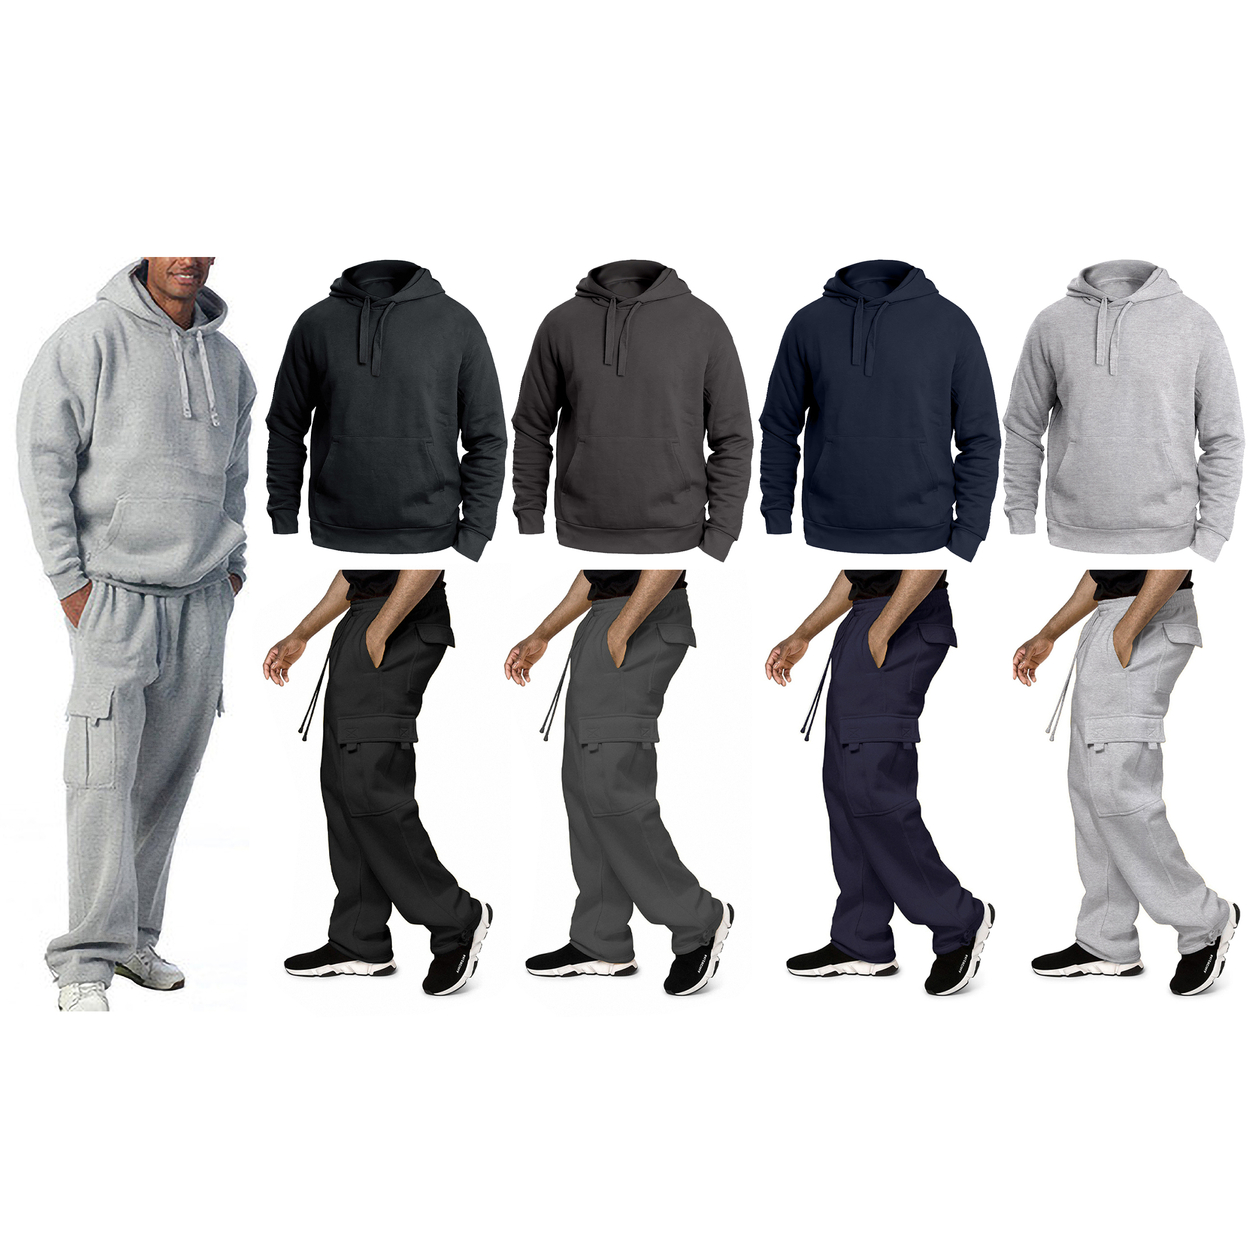 2-Pack: Men's Big & Tall Winter Warm Cozy Athletic Fleece Lined Multi-Pocket Cargo Sweatsuit - Charcoal, Medium